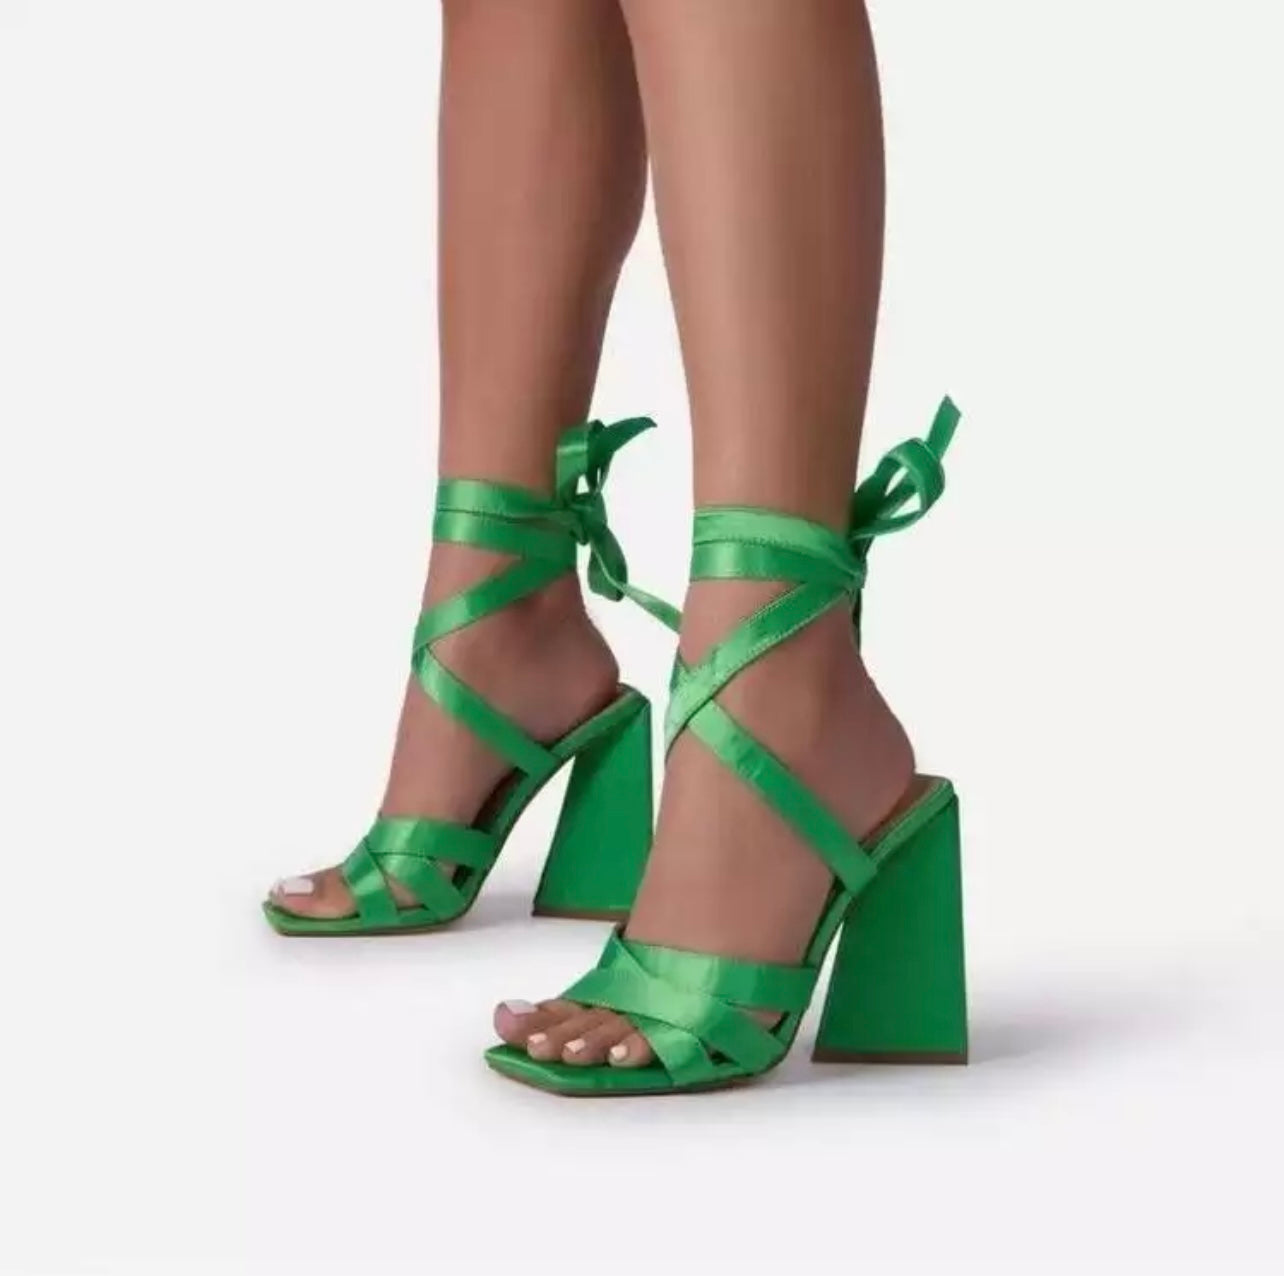 Ready For You | Women’s Platform Sandals Preorder Ships 5/20 - Seasonal Secrets